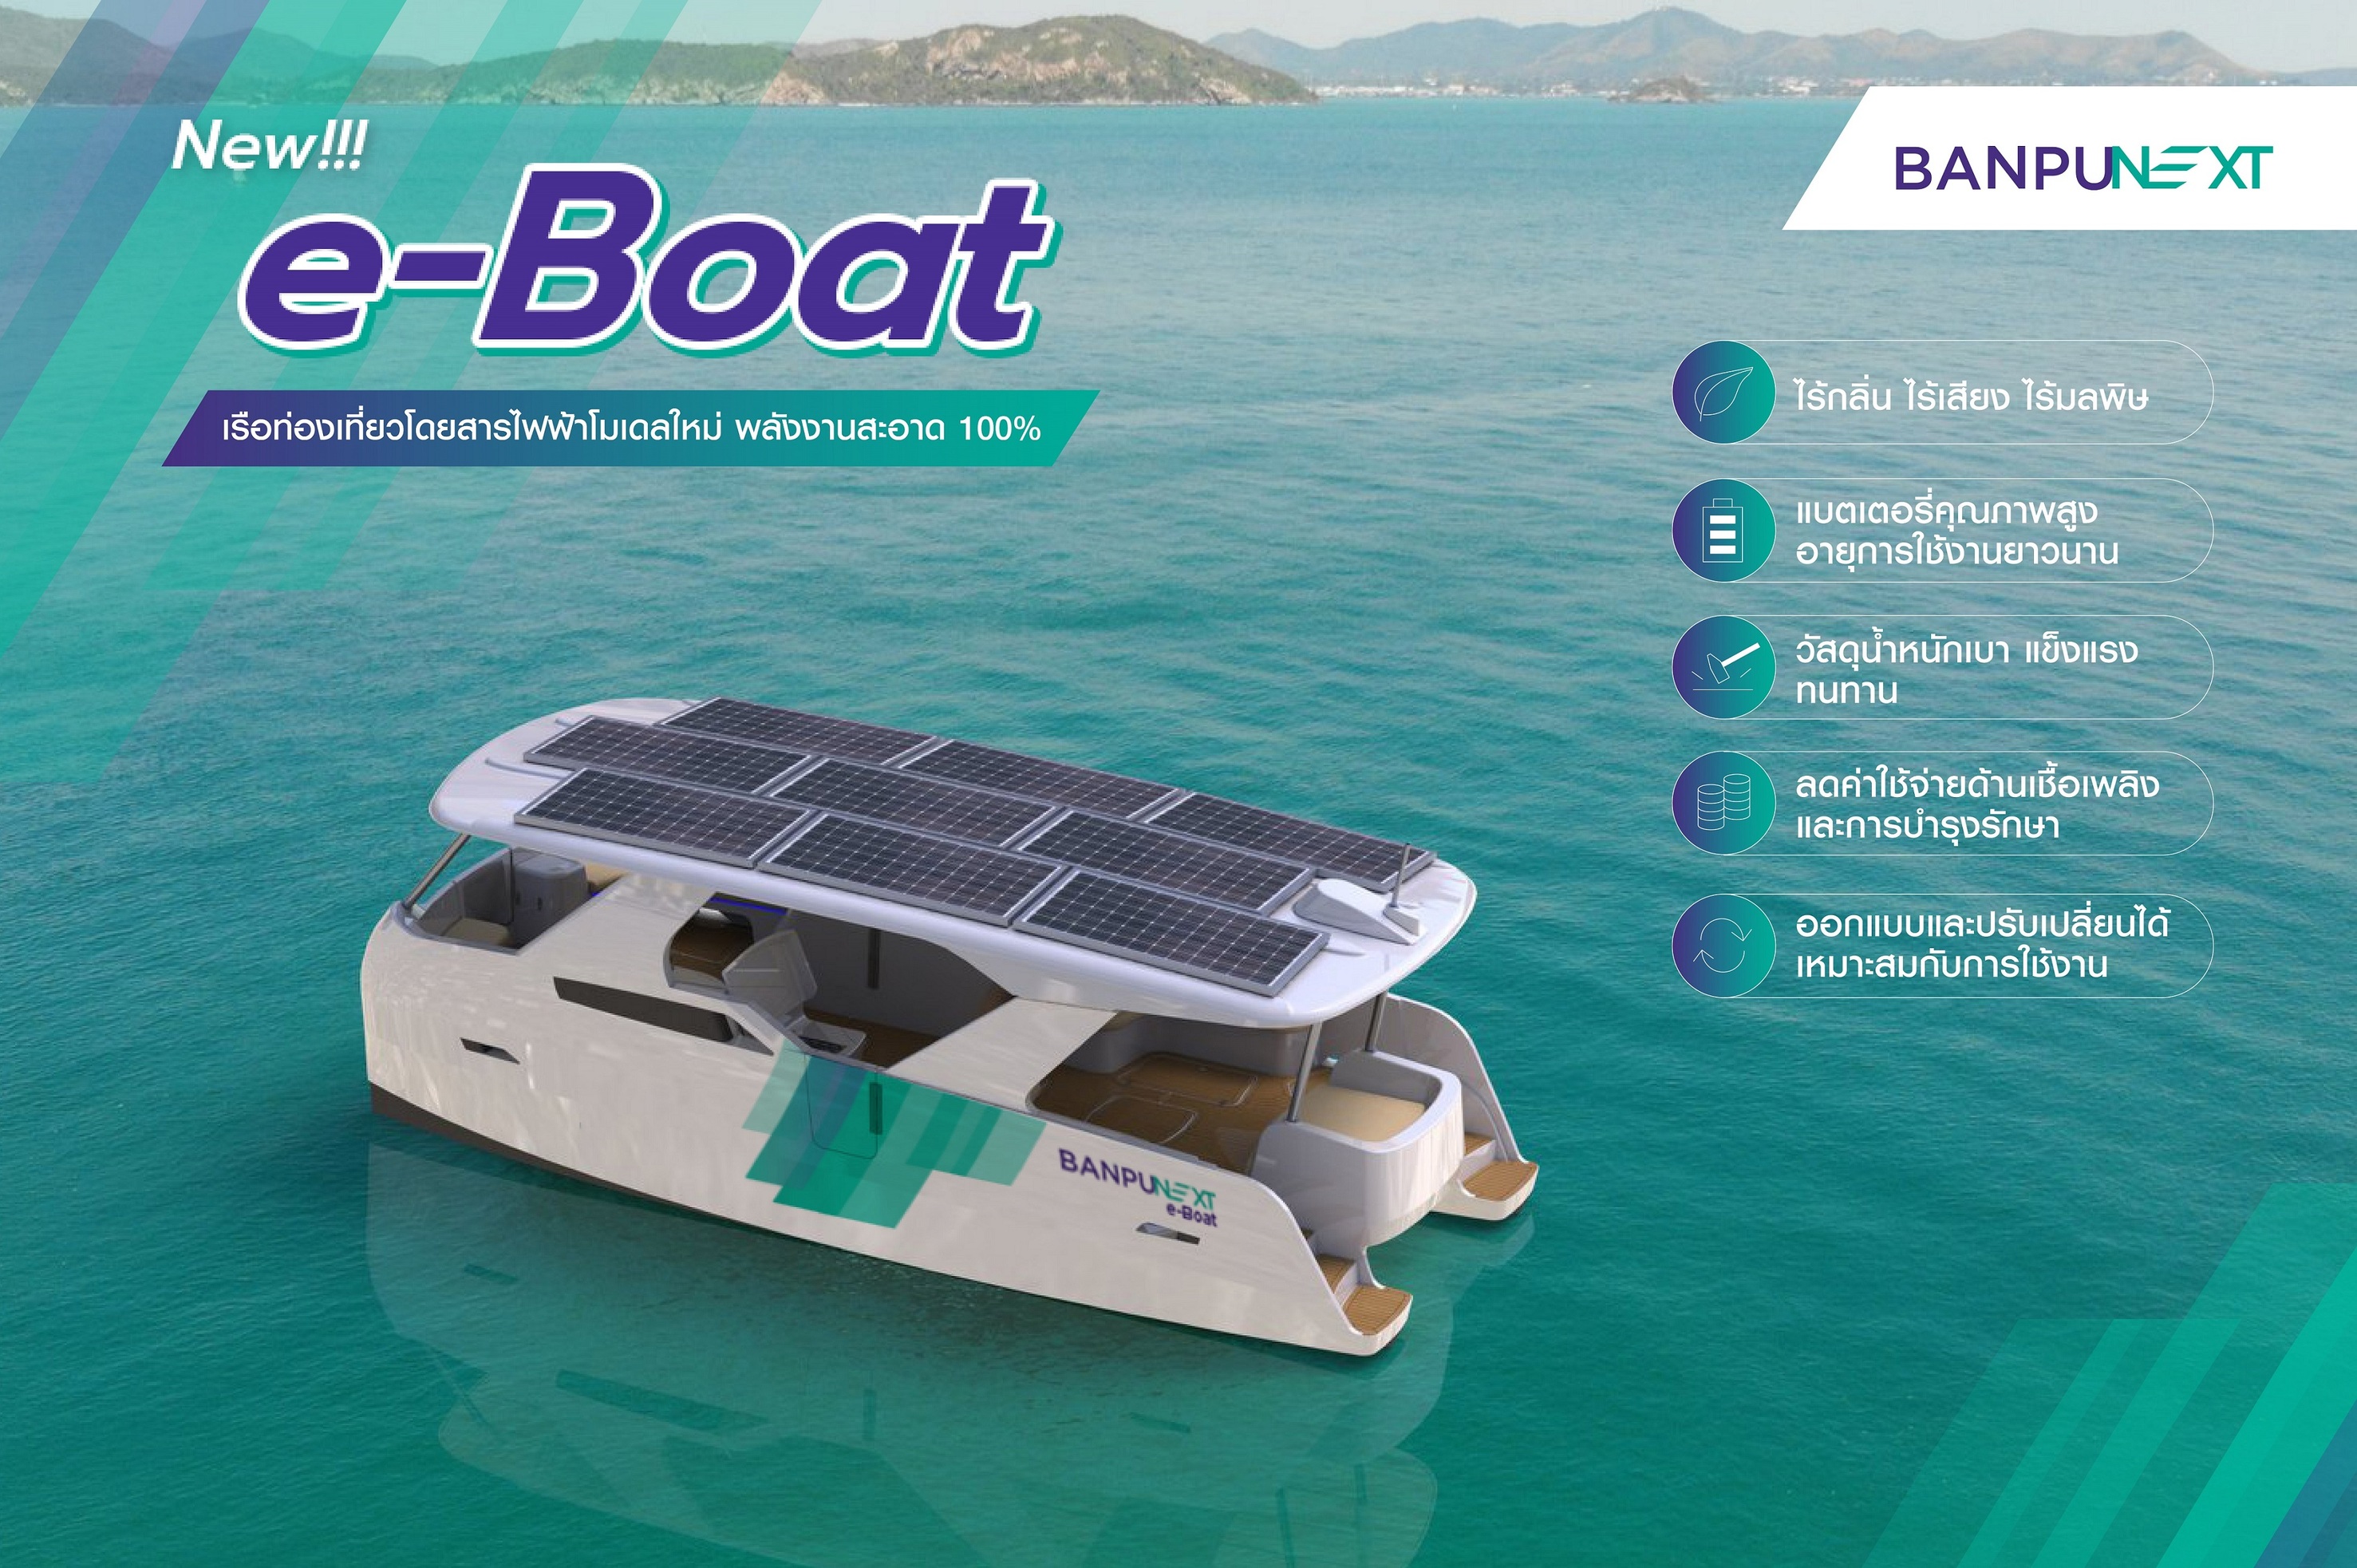 Banpu NEXT เดินหน้าพัฒนา e-Boat เรือท่องเที่ยวไฟฟ้าโมเดลใหม่ ตอบเทรนด์การท่องเที่ยวยั่งยืน